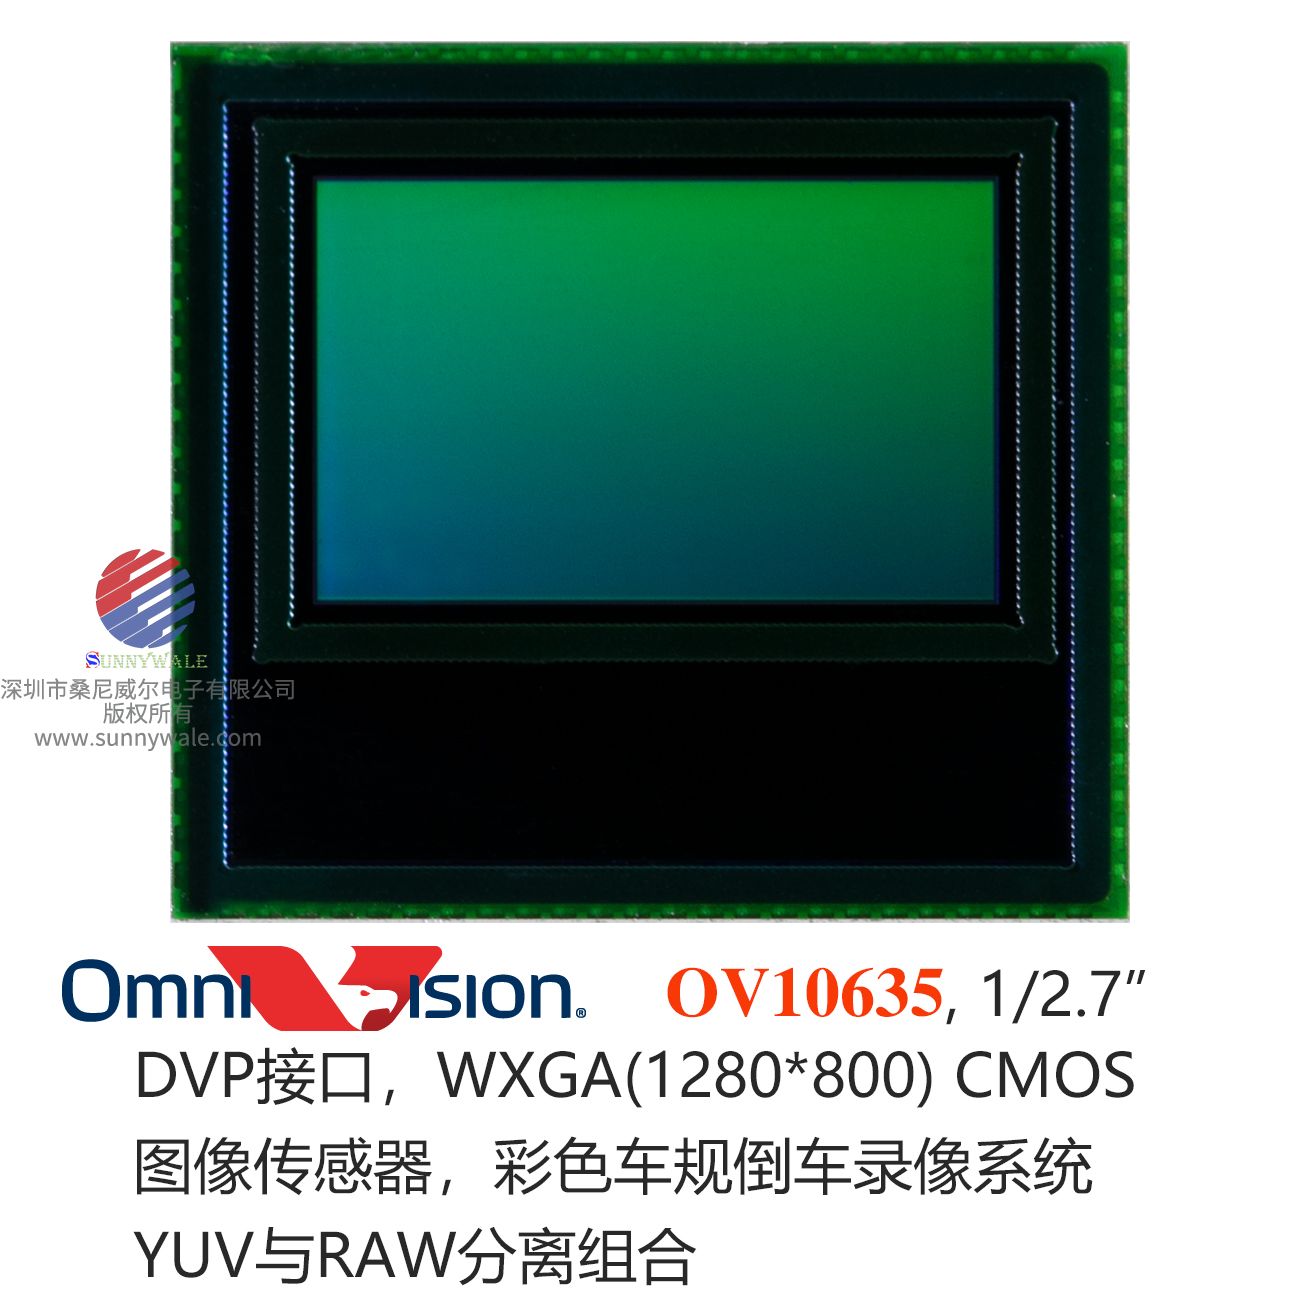 OV10635彩色，OV10135黑白， OmniVision经销商，1/2.7 image CMOS sensor， WXGA(1280*800)图像传感器，车规后视摄像头，倒车影像转感器，百万像素汽车后视摄像头芯片，DVP接口，YUV与RAW分离组合，高动态范围传感器